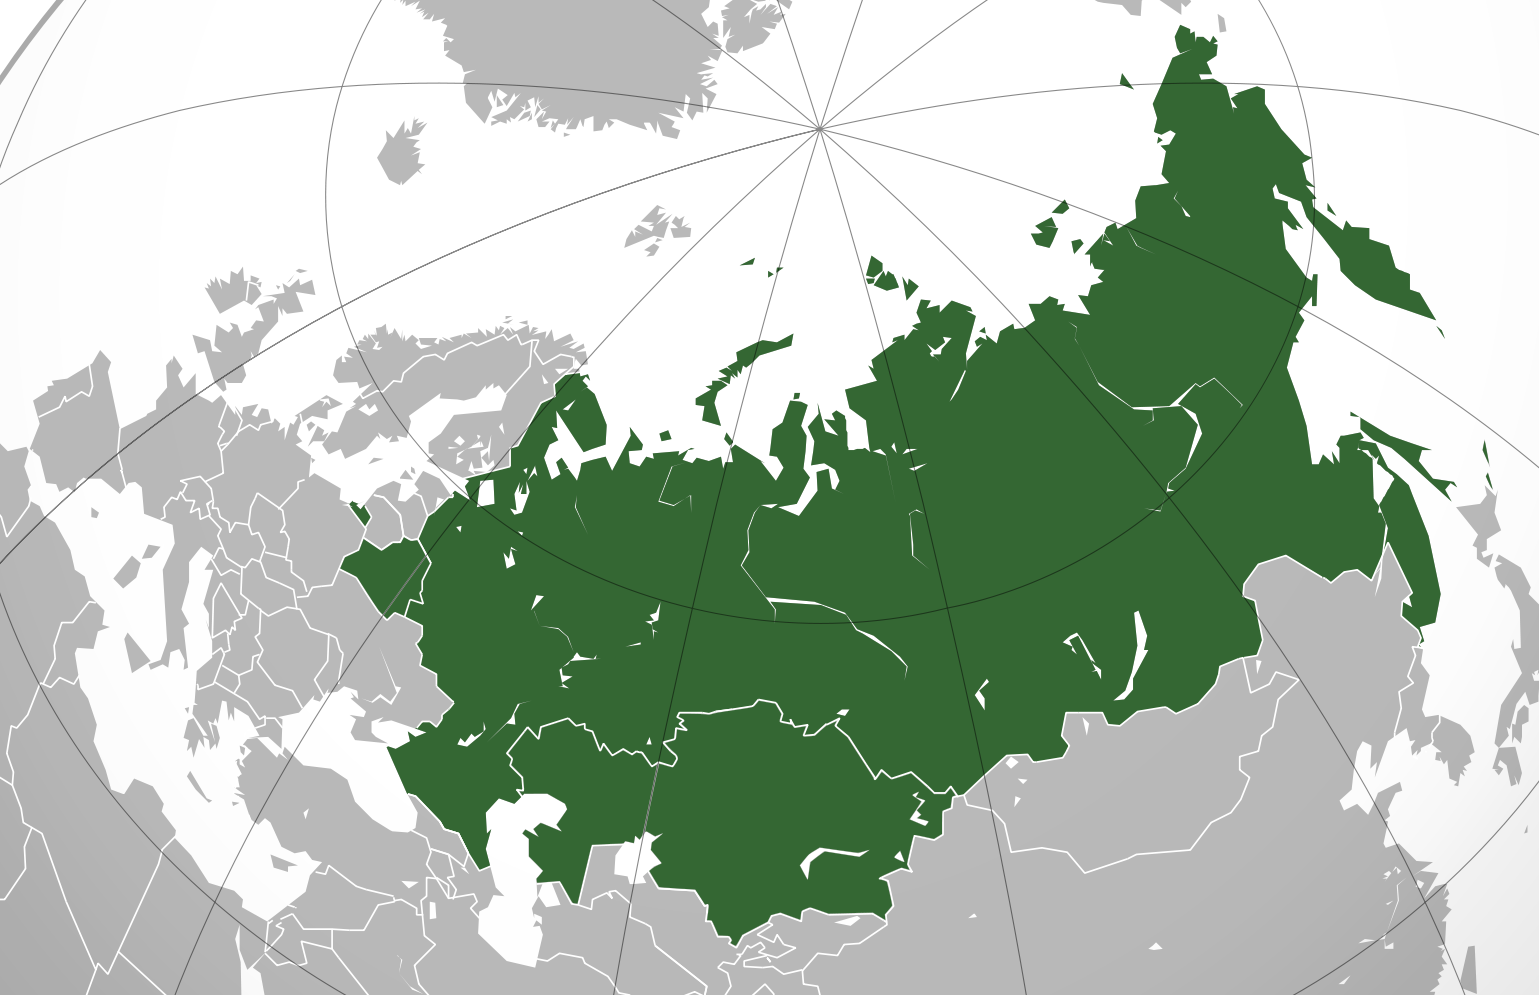 Proposed scope of Eurasian Union.